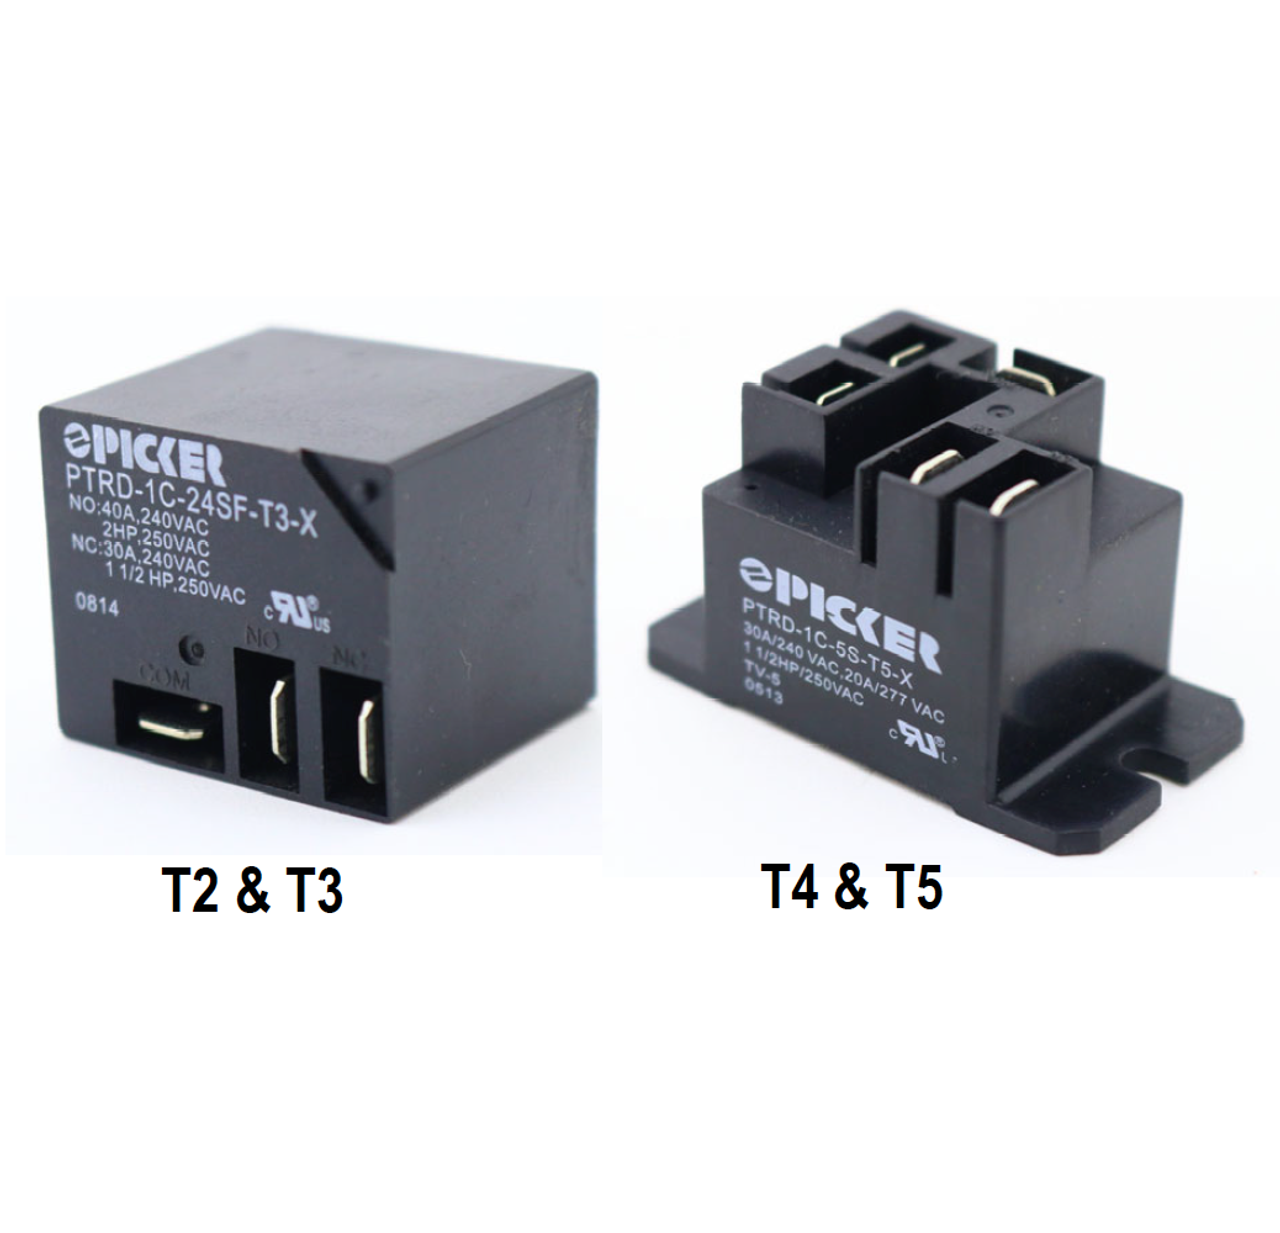 Picker PTRD-1A-28ST-T4-X-A0.6G Power Relays